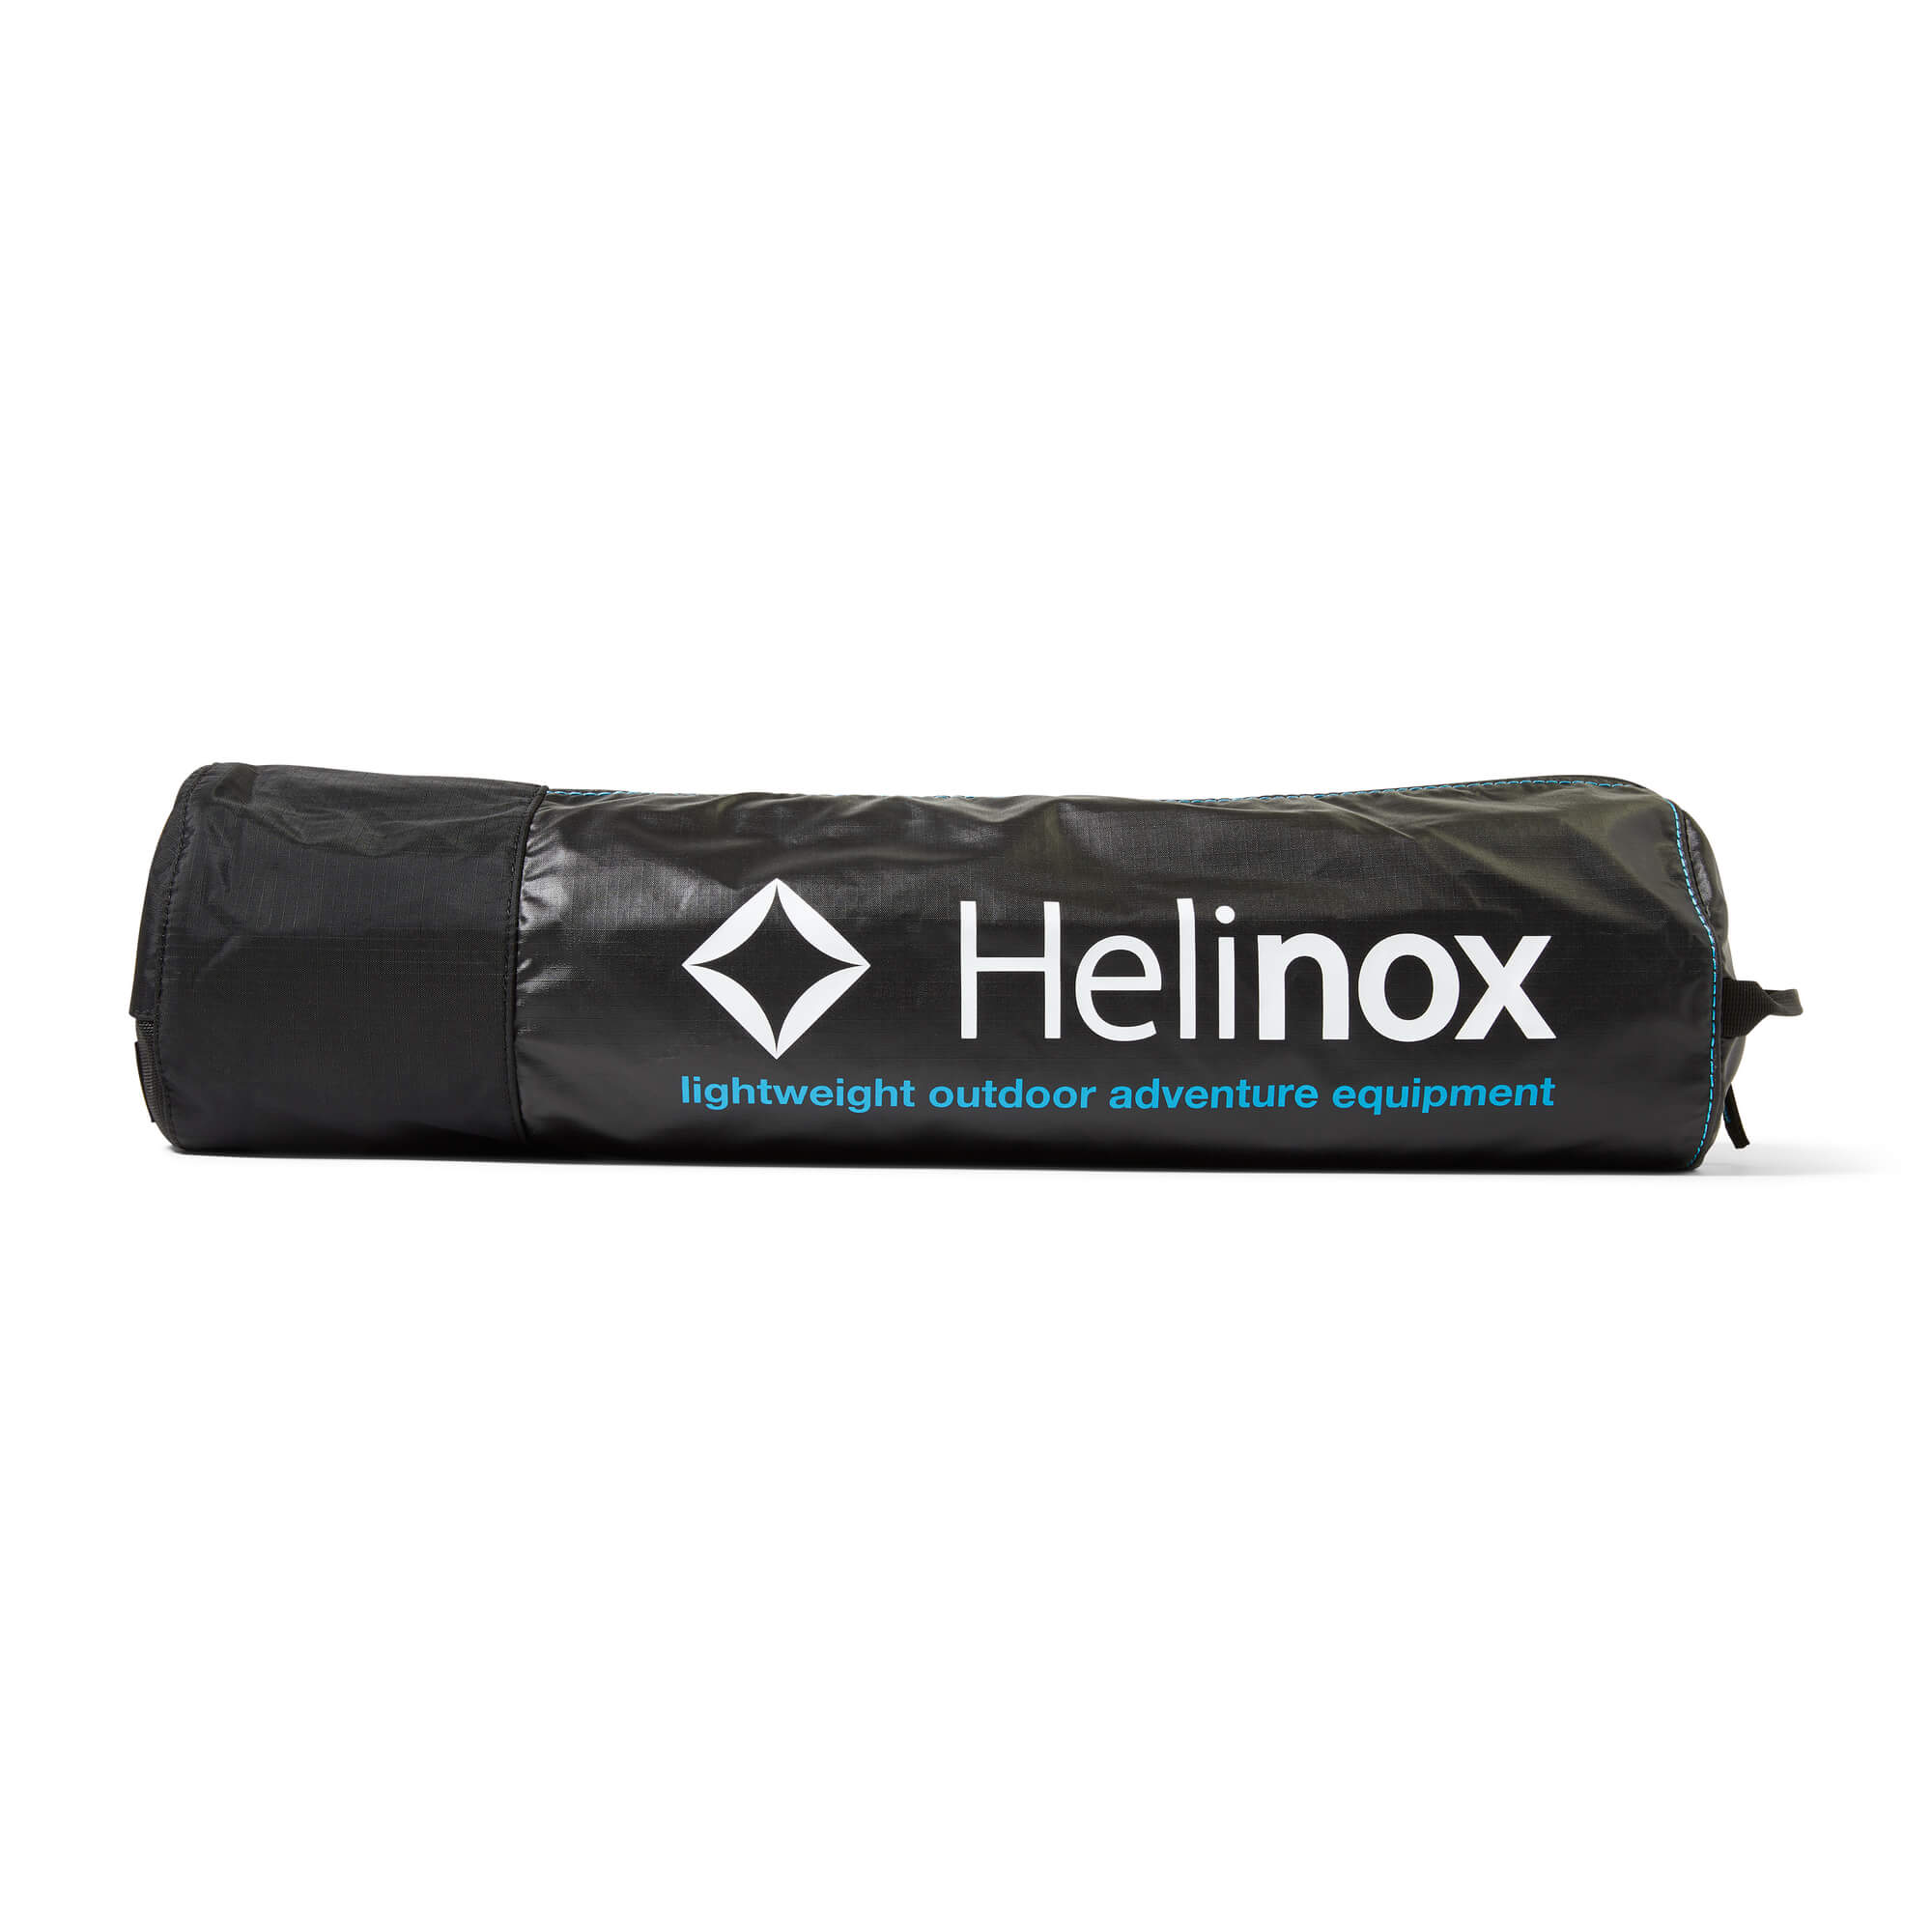 Helinox High Cot One | Free Shipping & 5 Year Warranty